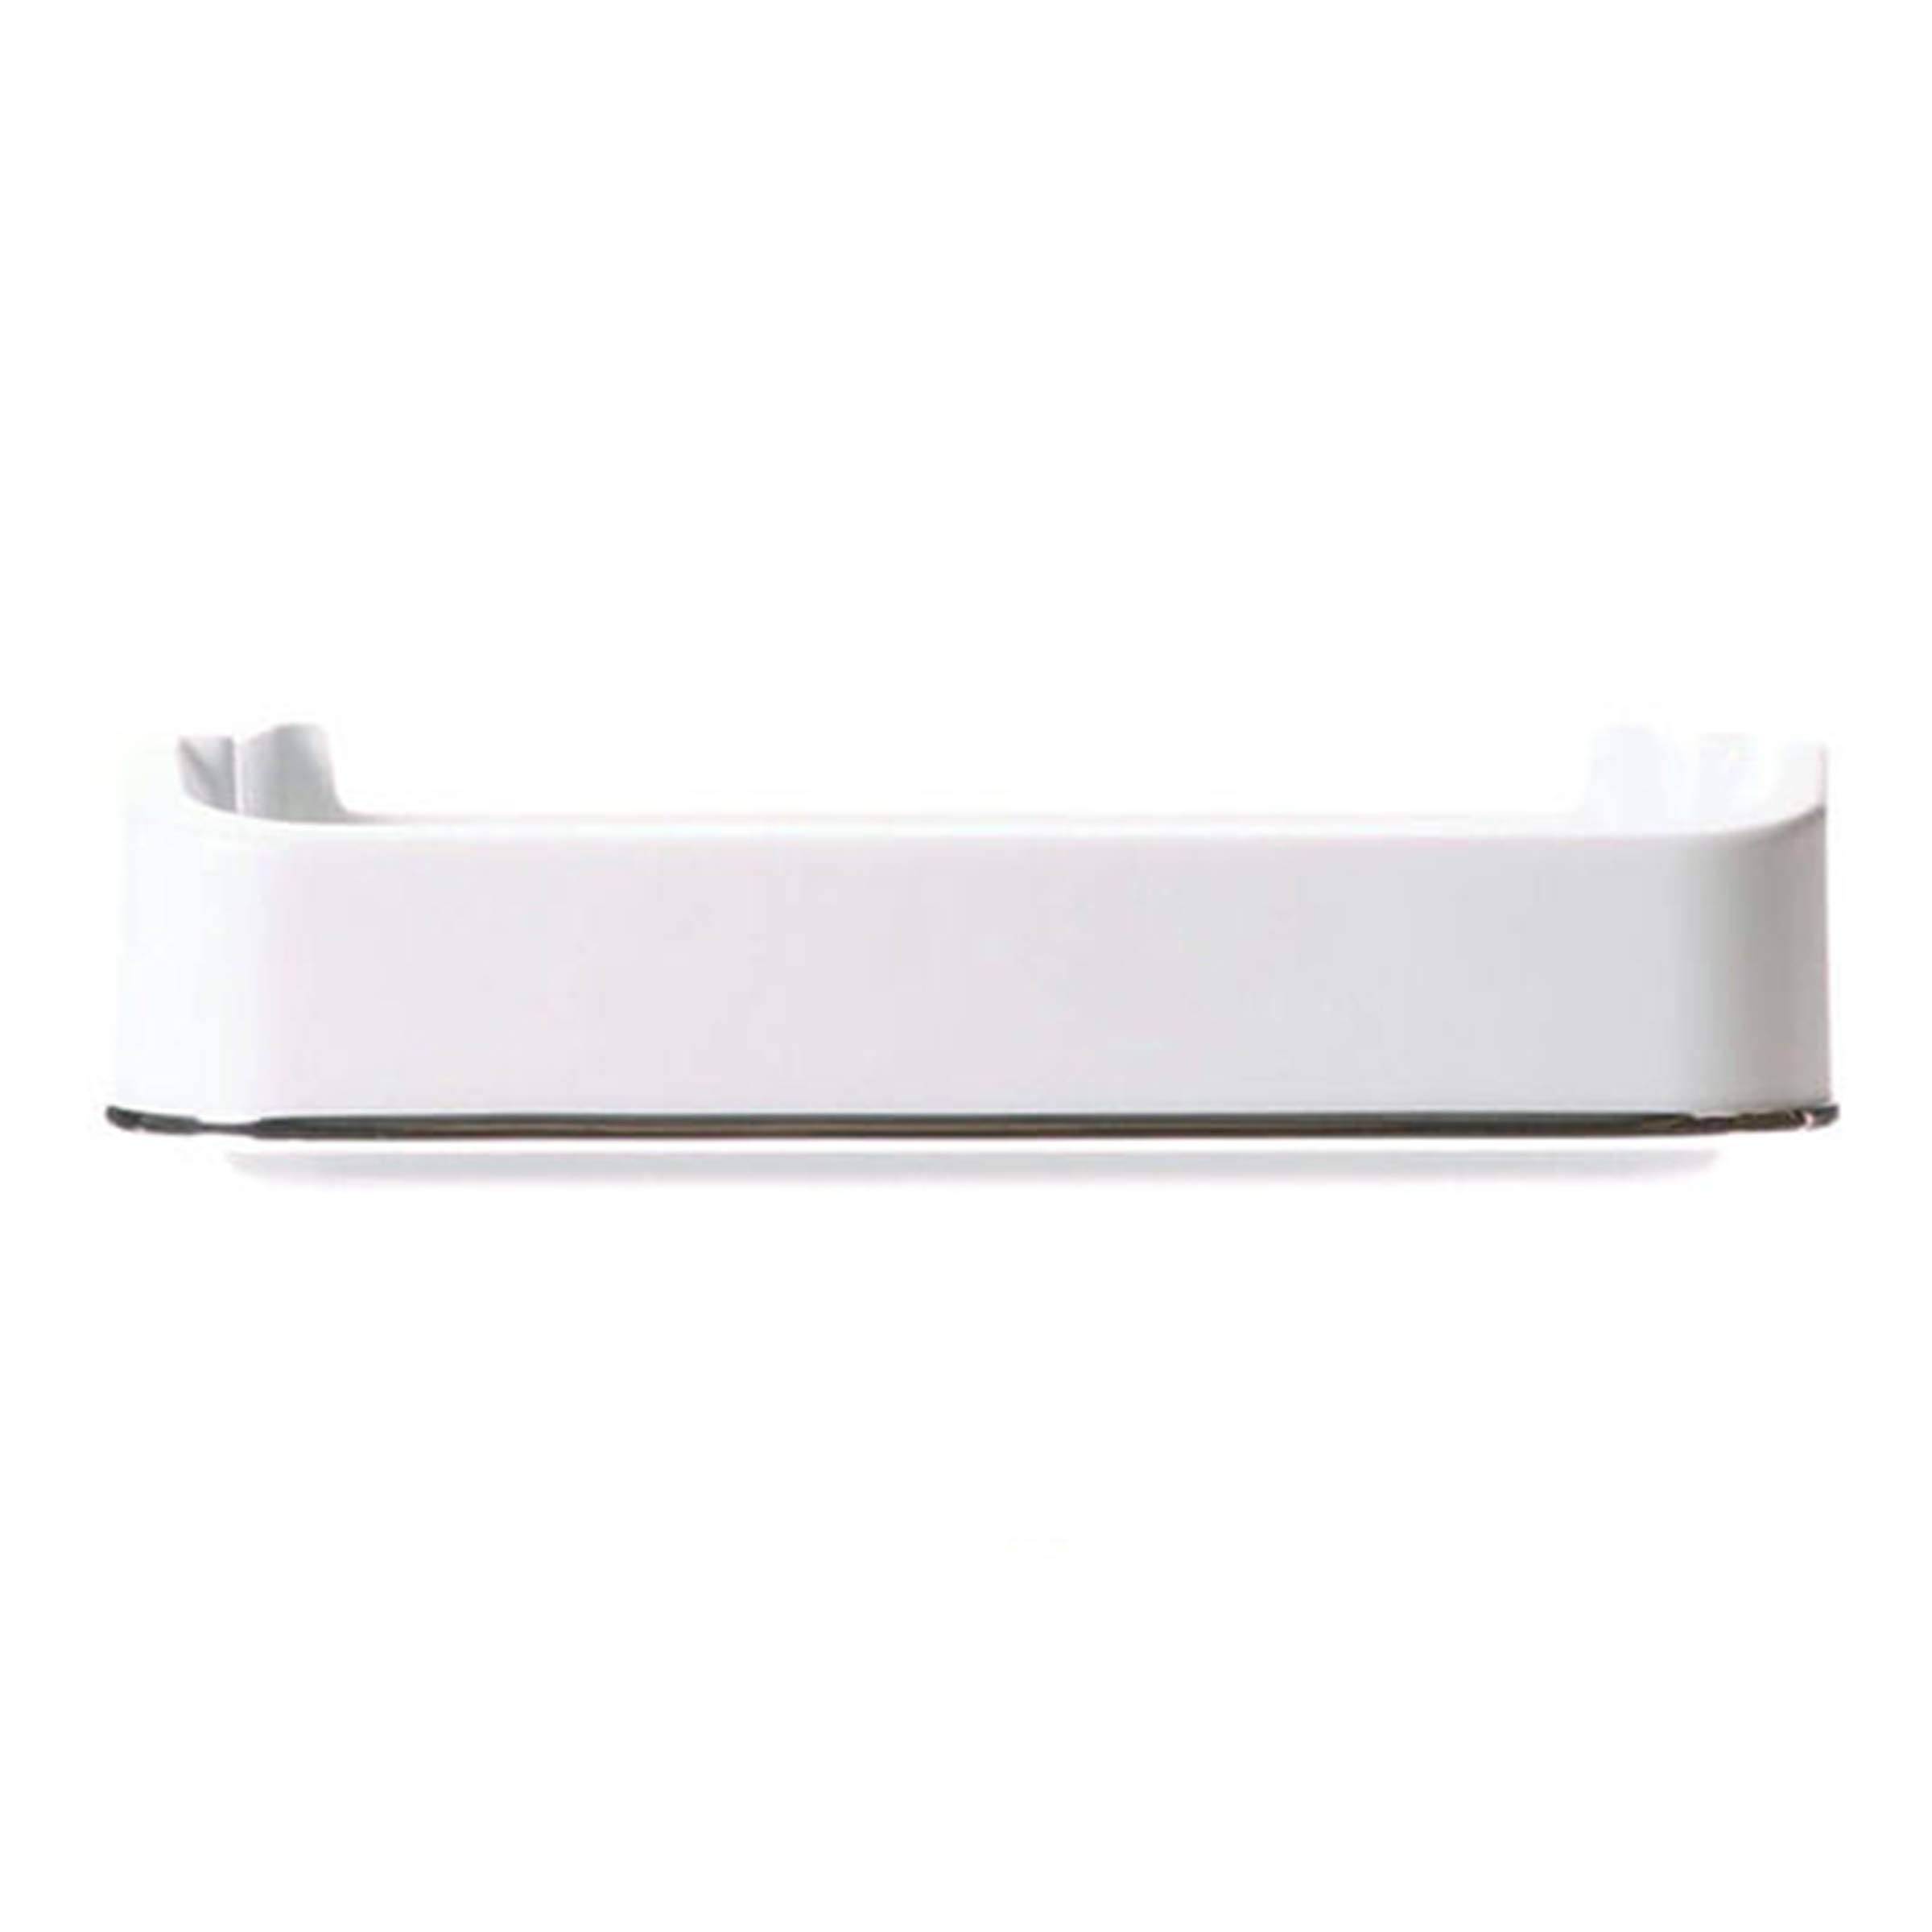 Frigidaire Refrigerator Door Shelf Bin – White/Silver. Part #218592325-USED